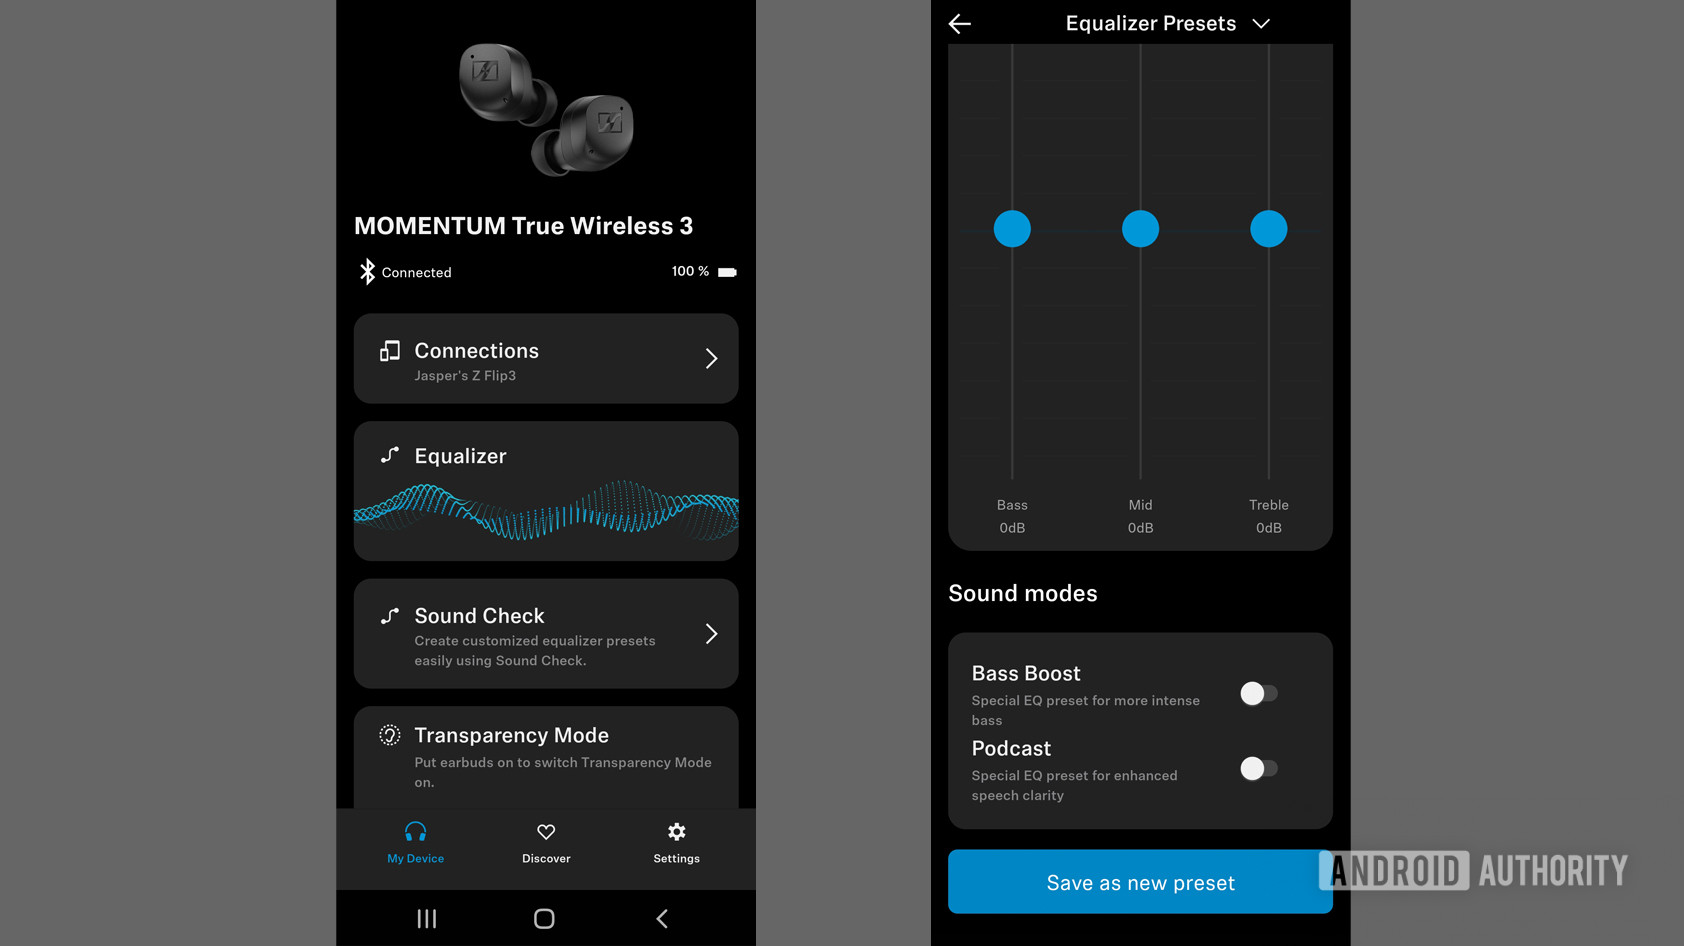 Sennheiser momentum true wireless 3 equalizer app.